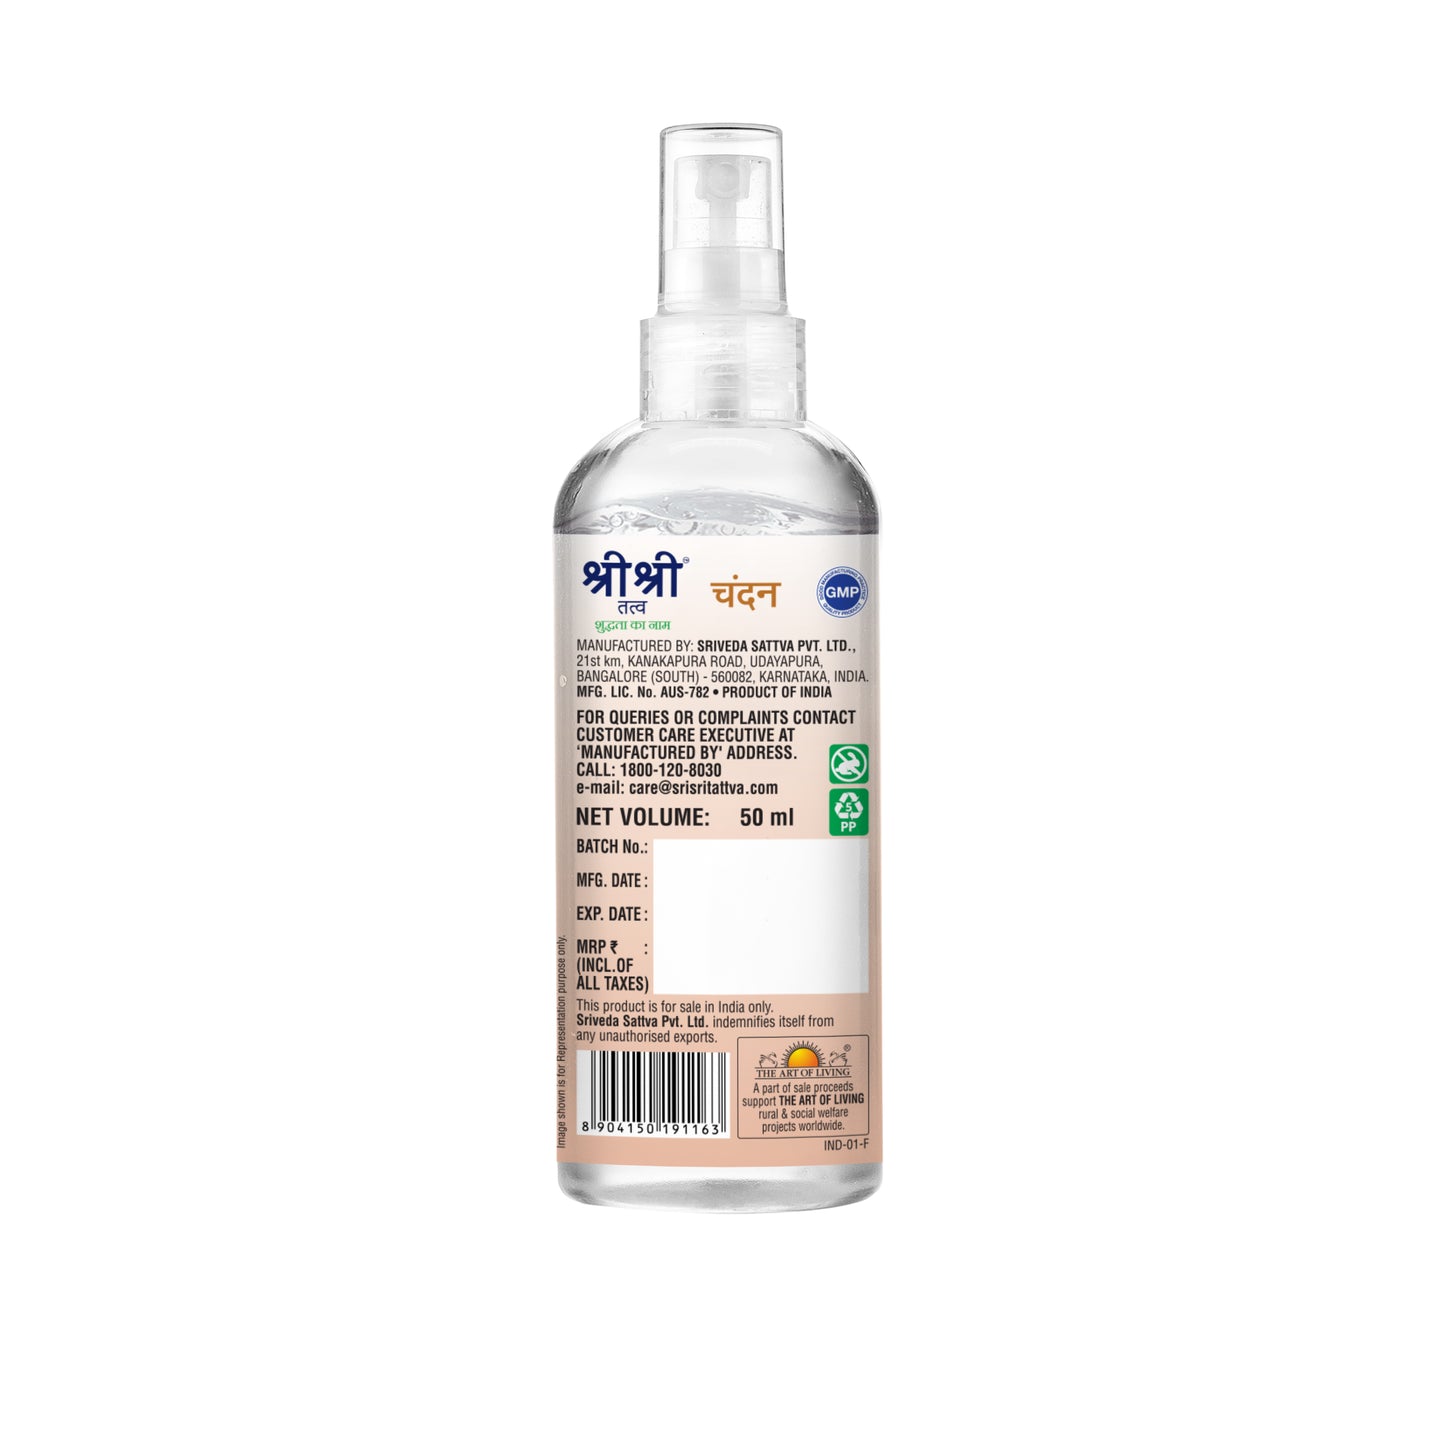 Chandan - Southern Sandalwood Mist | Keep Your Skin Calm And Refreshed | Cleanser, Moisturiser, Toner, Fragrance | Spray Bottle | 50 ml